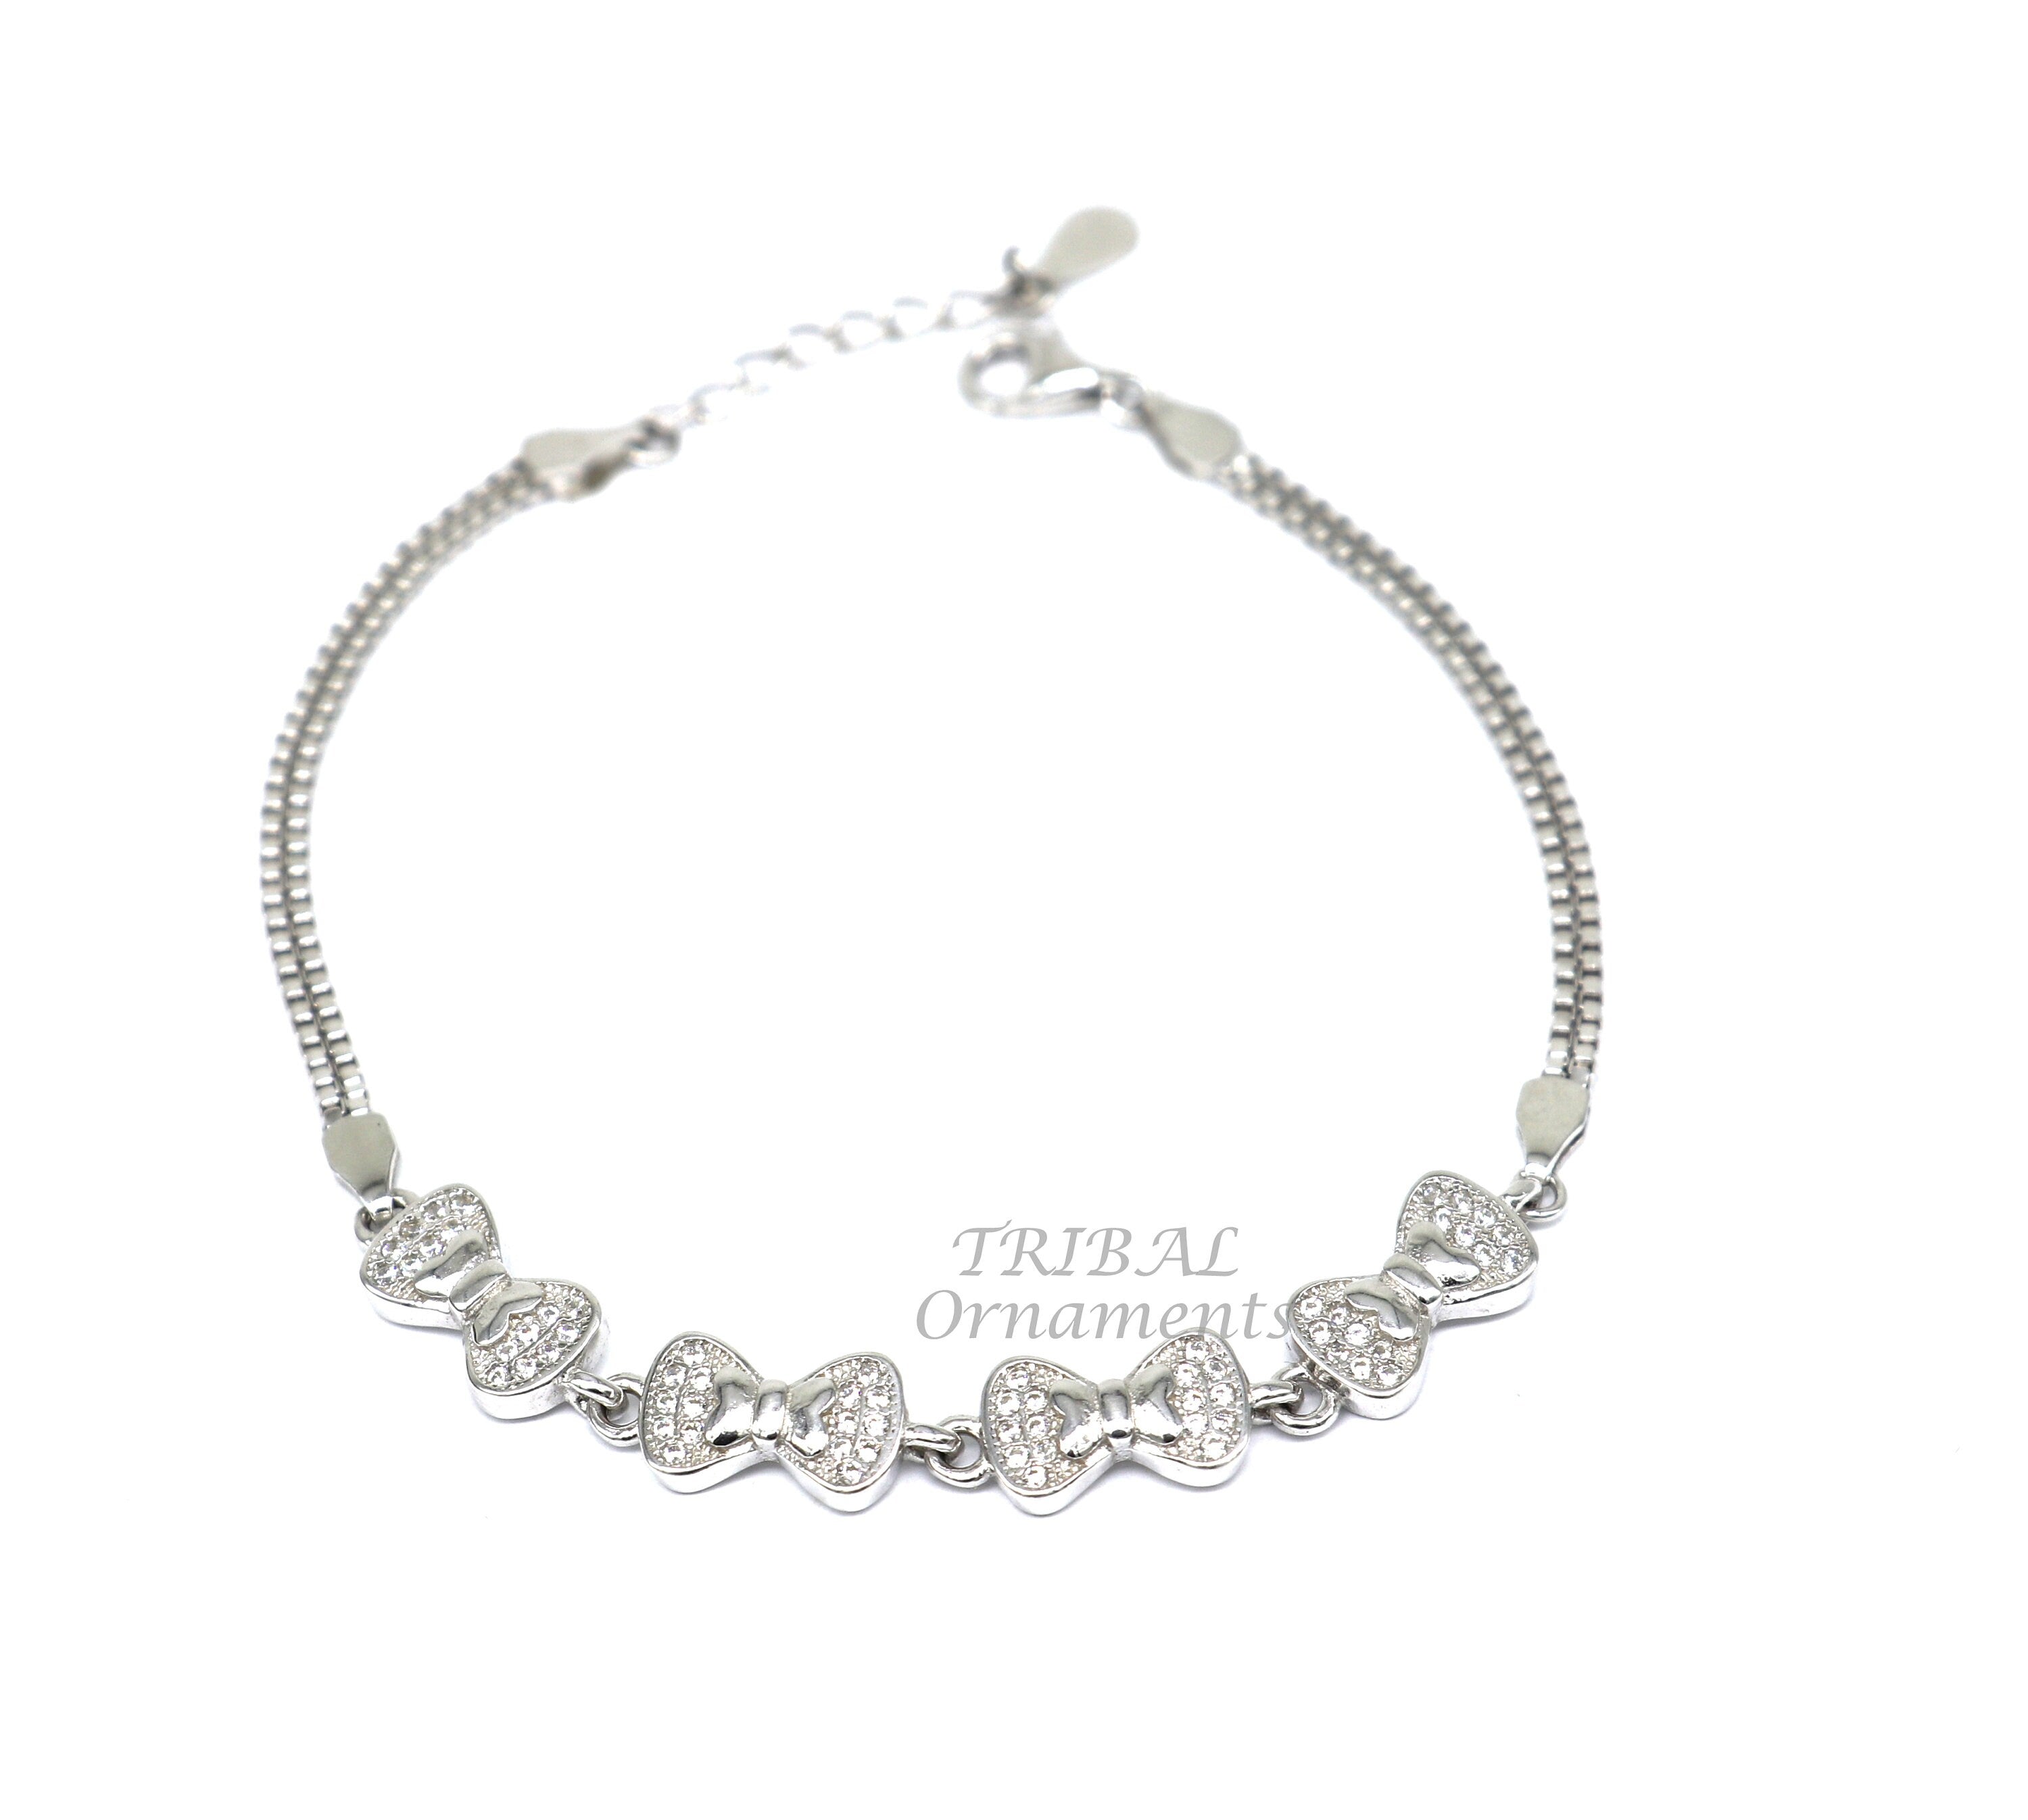 How to Buy Bracelets for Women @ Affordable Price - How to Buy Bracelets  for Women @ Affordable Price | Chunky silver bracelet, Buy bracelets,  Comfortable bracelet